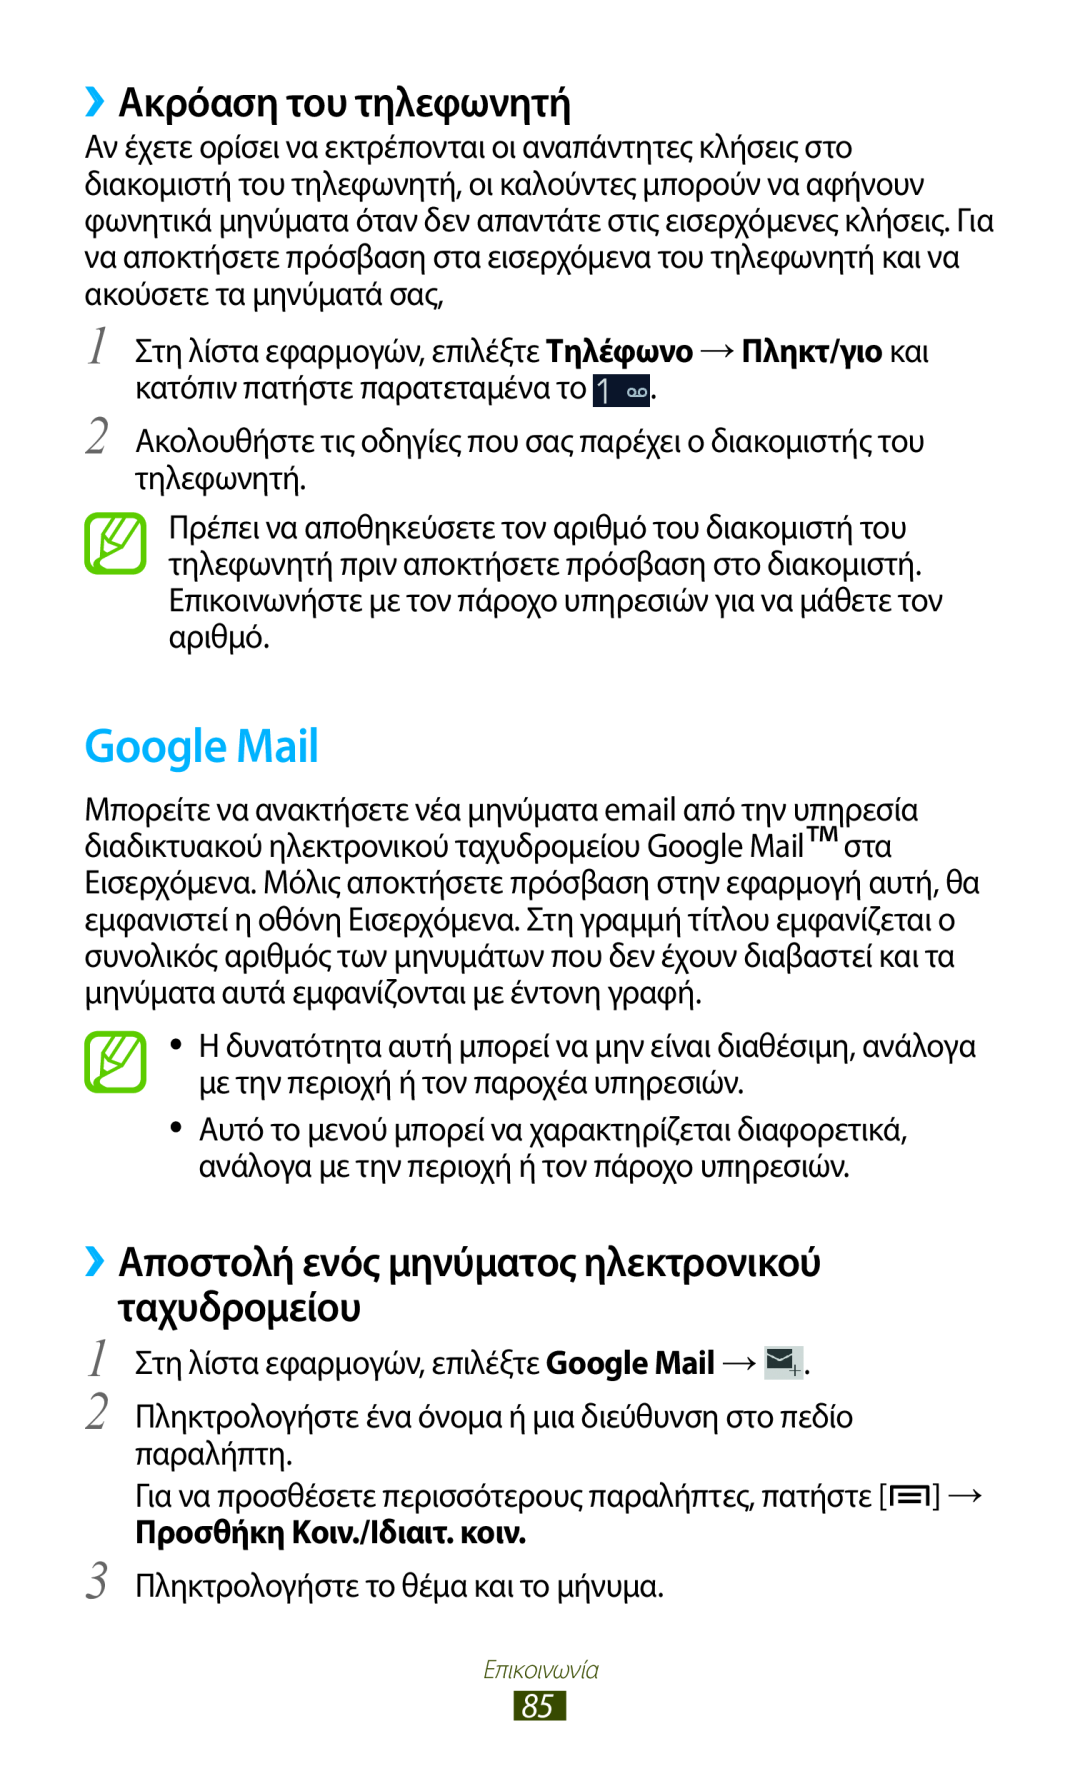 Samsung GT-N7000ZBEVGR manual Google Mail, ››Ακρόαση του τηλεφωνητή, ››Αποστολή ενός μηνύματος ηλεκτρονικού, ταχυδρομείου 